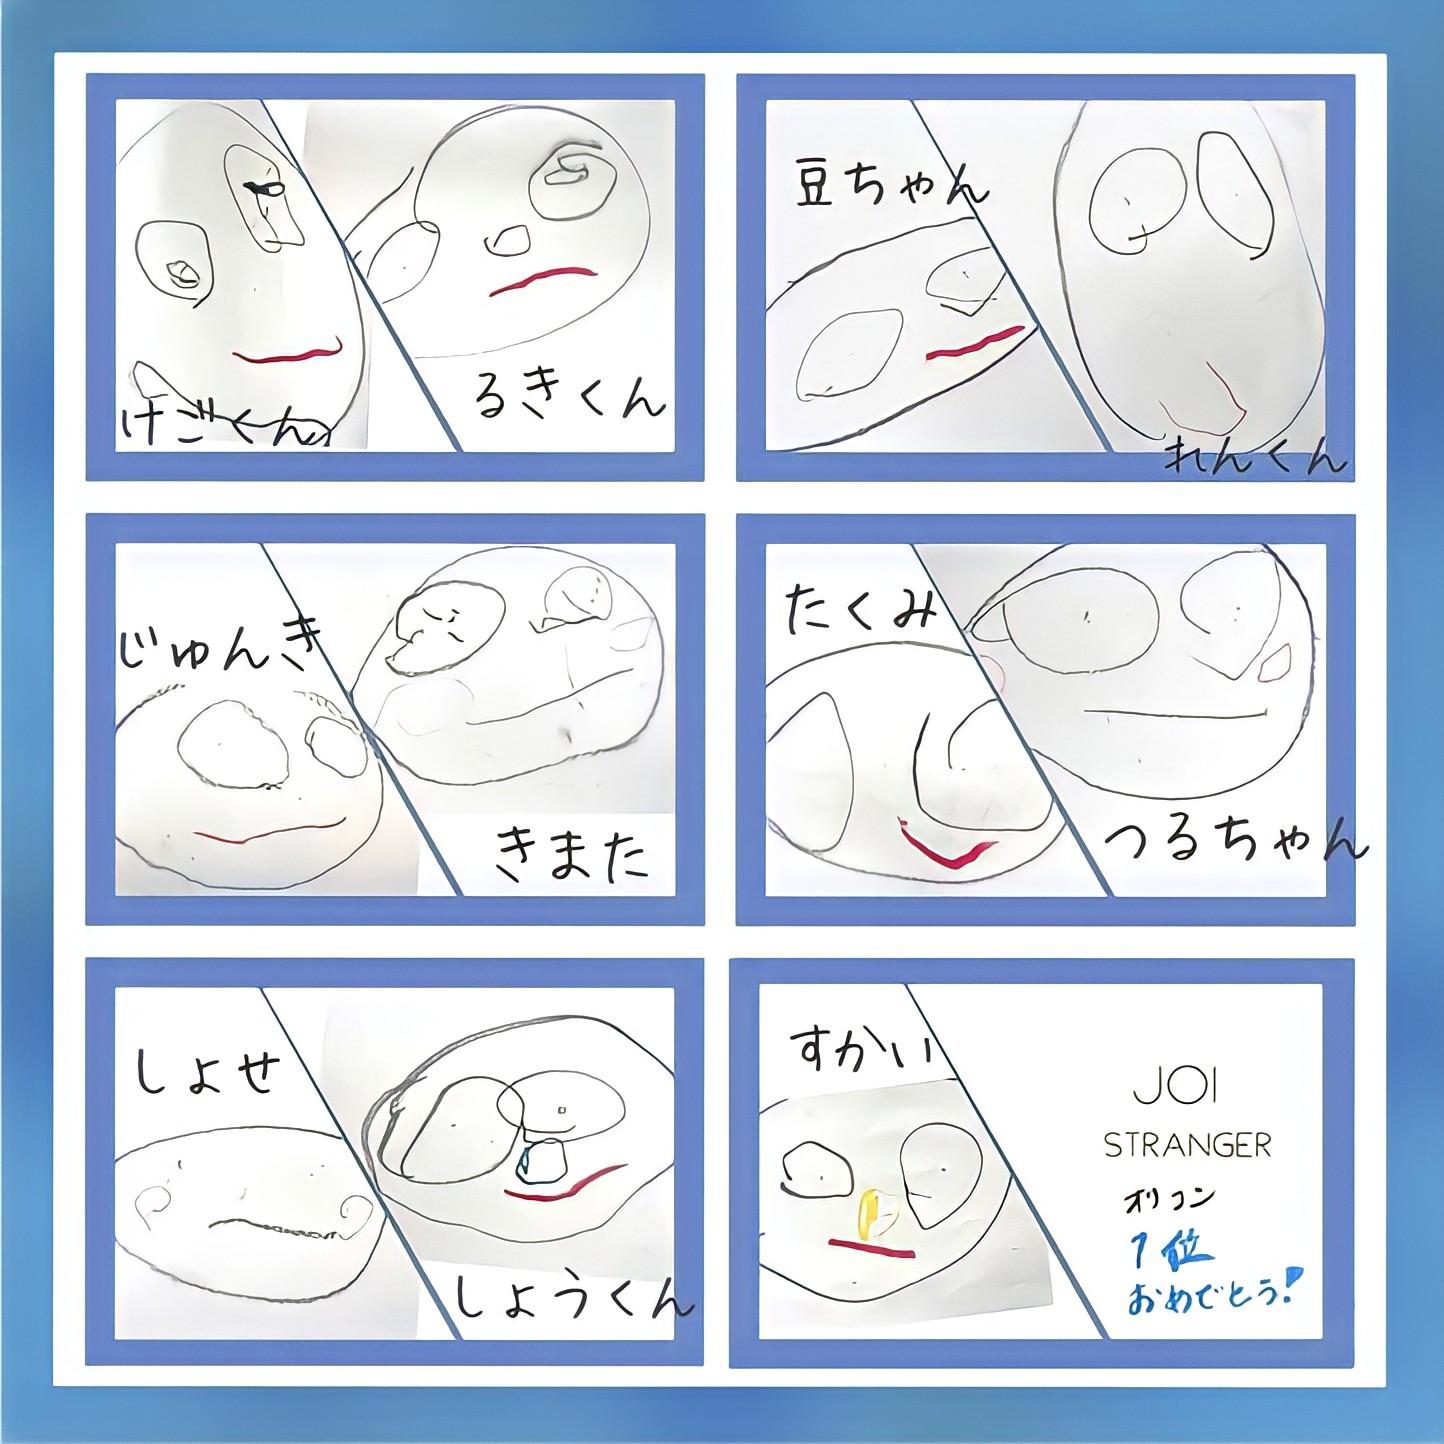 Illustrated by みこちゃんFamily